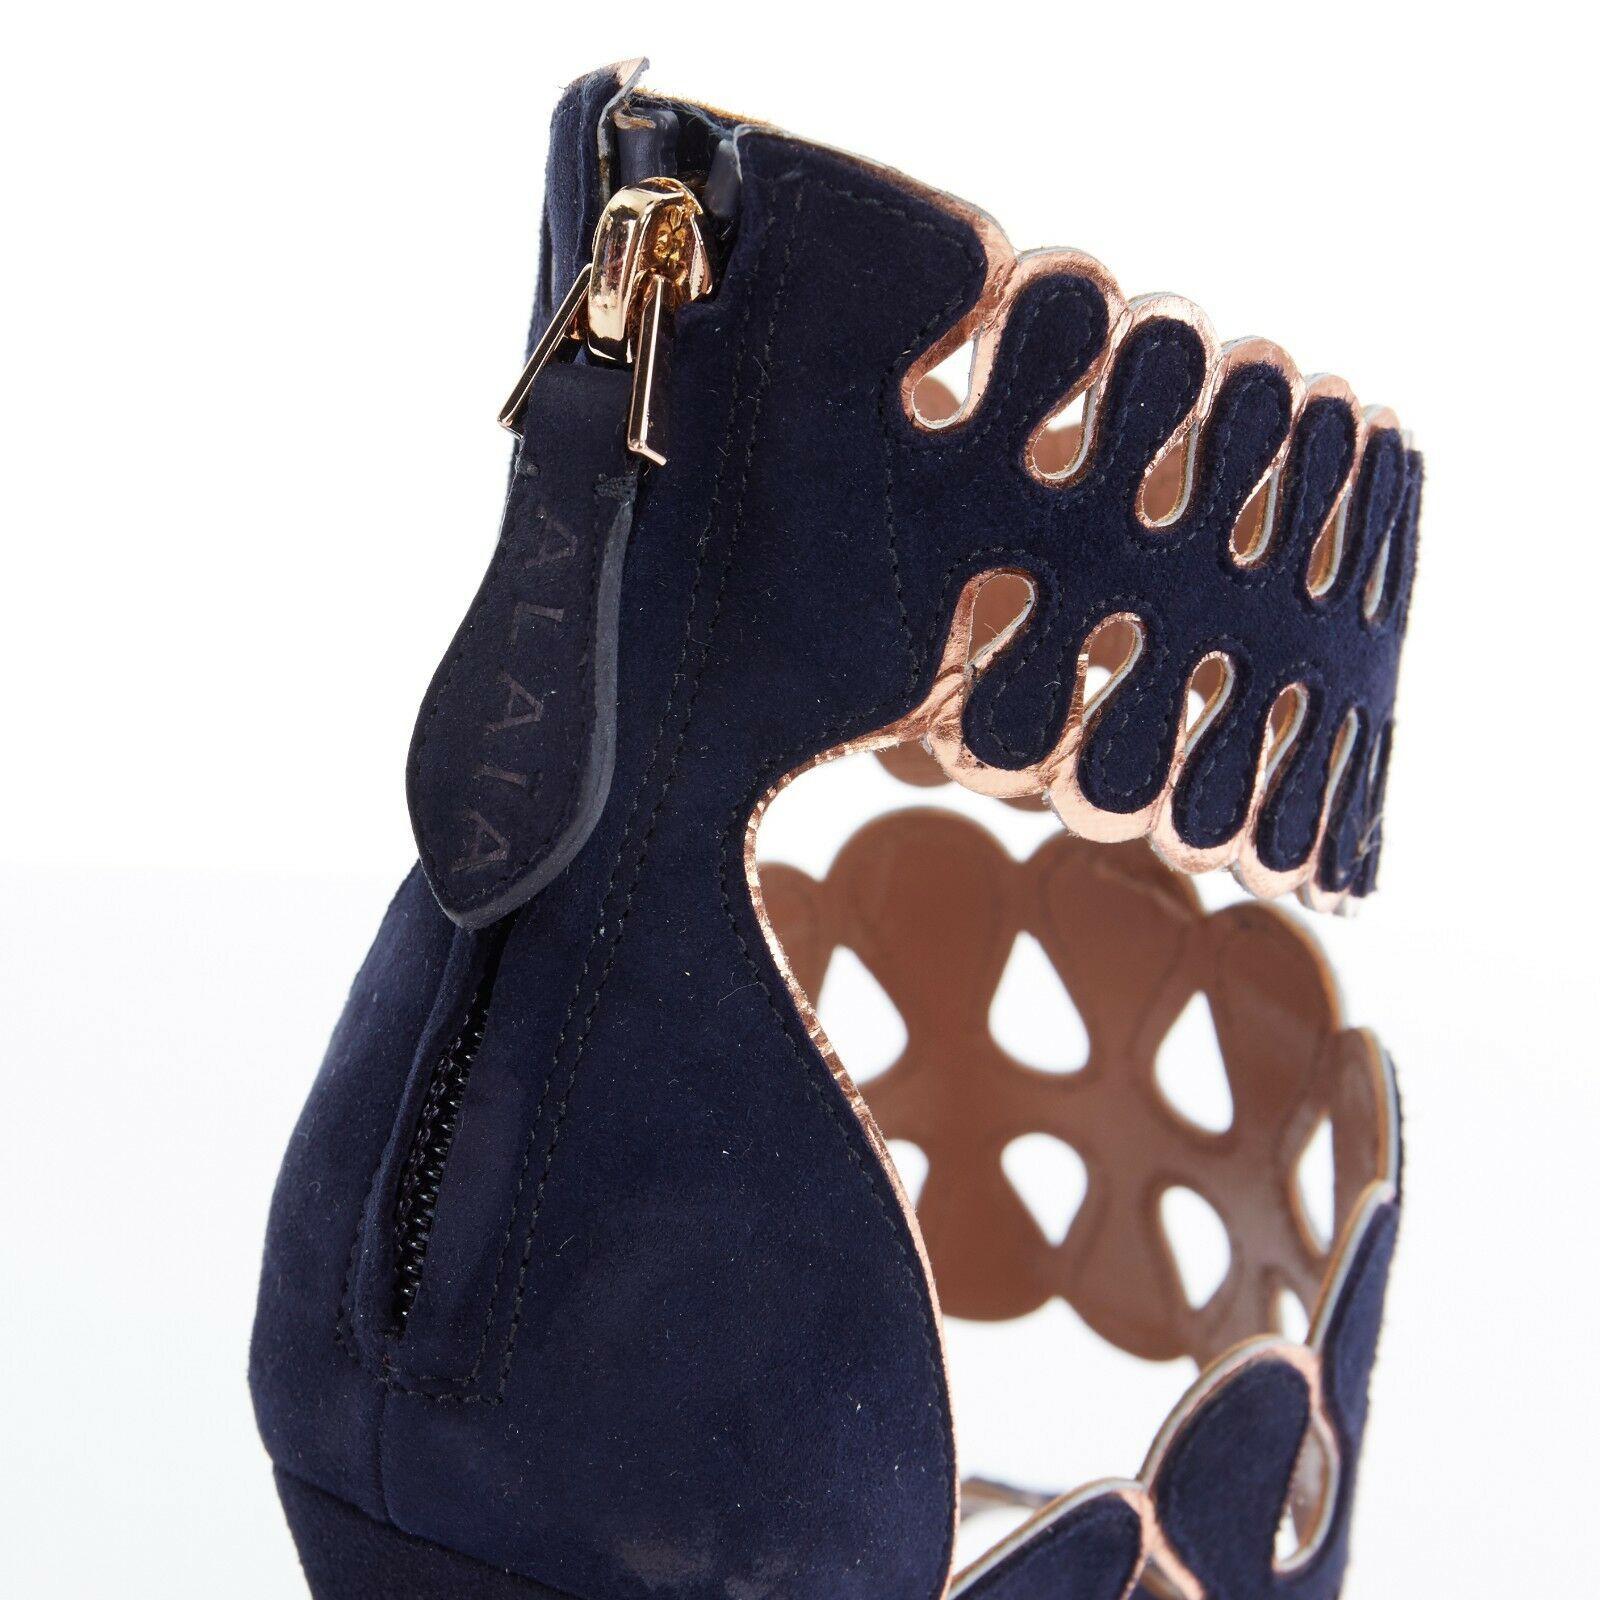 Women's ALAIA navy blue suede copper trimmed squiggly open toe sandal heel EU37 US7 UK4